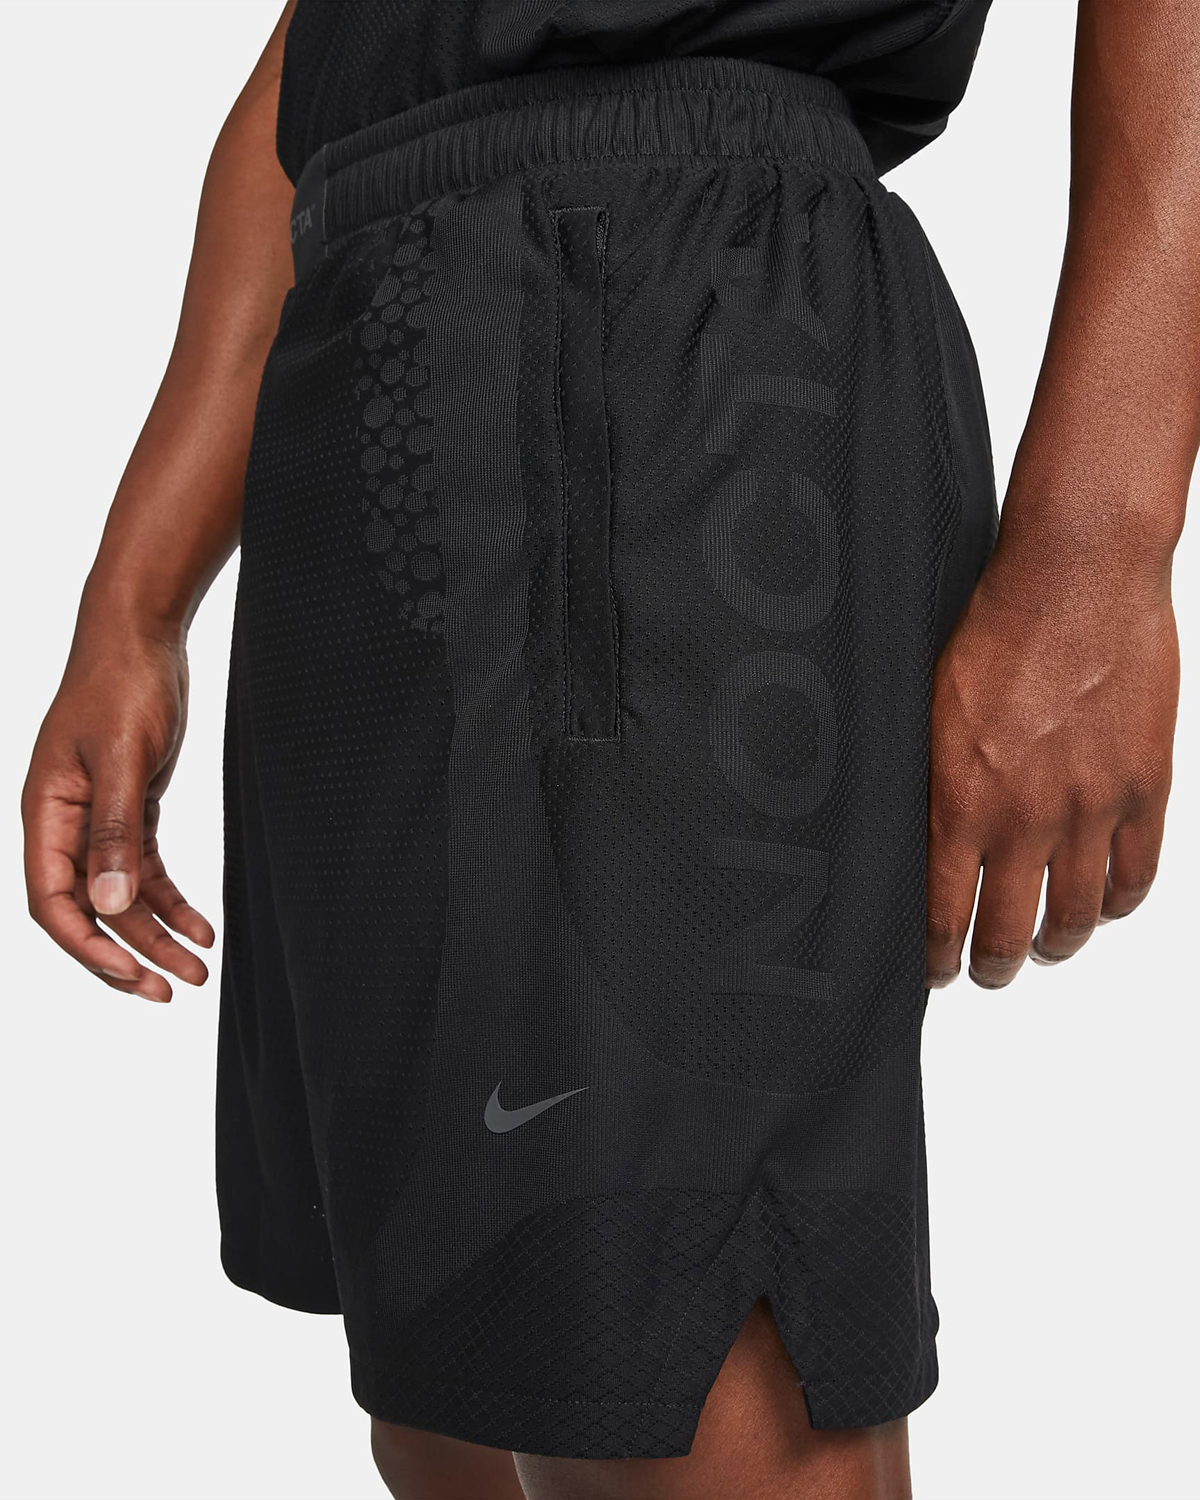 Drake-NOCTA-Nike-Basketball-Shorts-Black-2